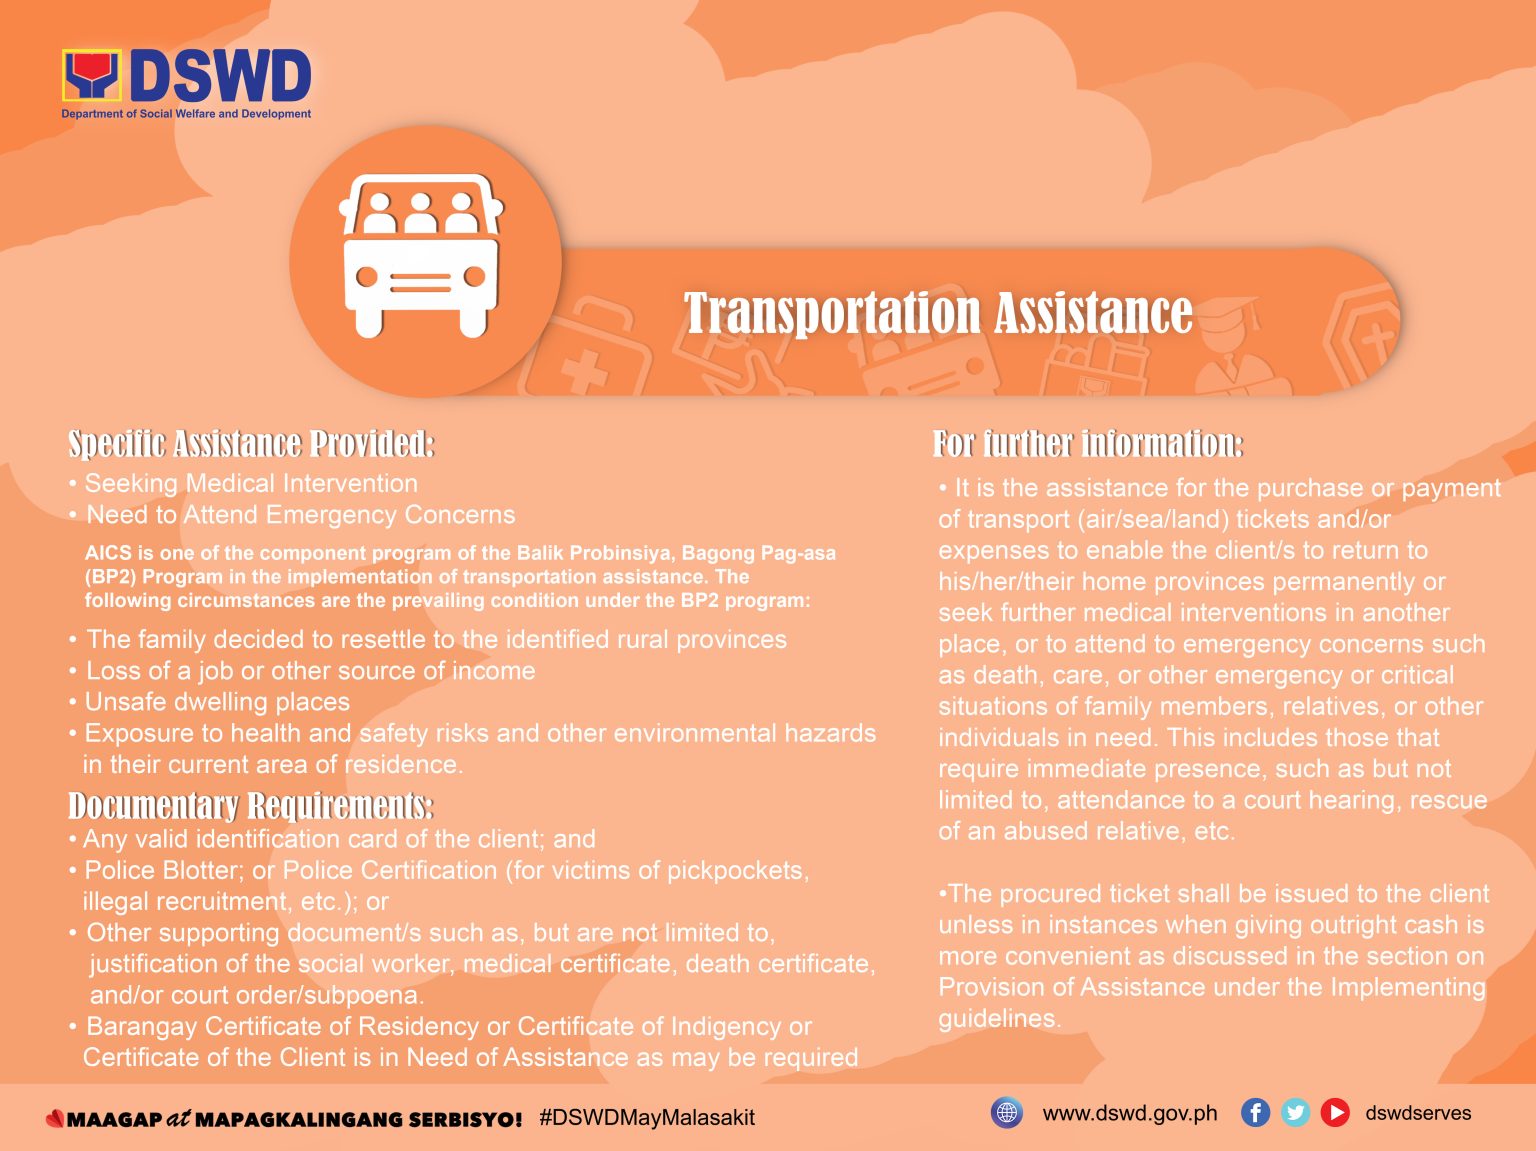 dswd transportation assistance for filipinos under aics program